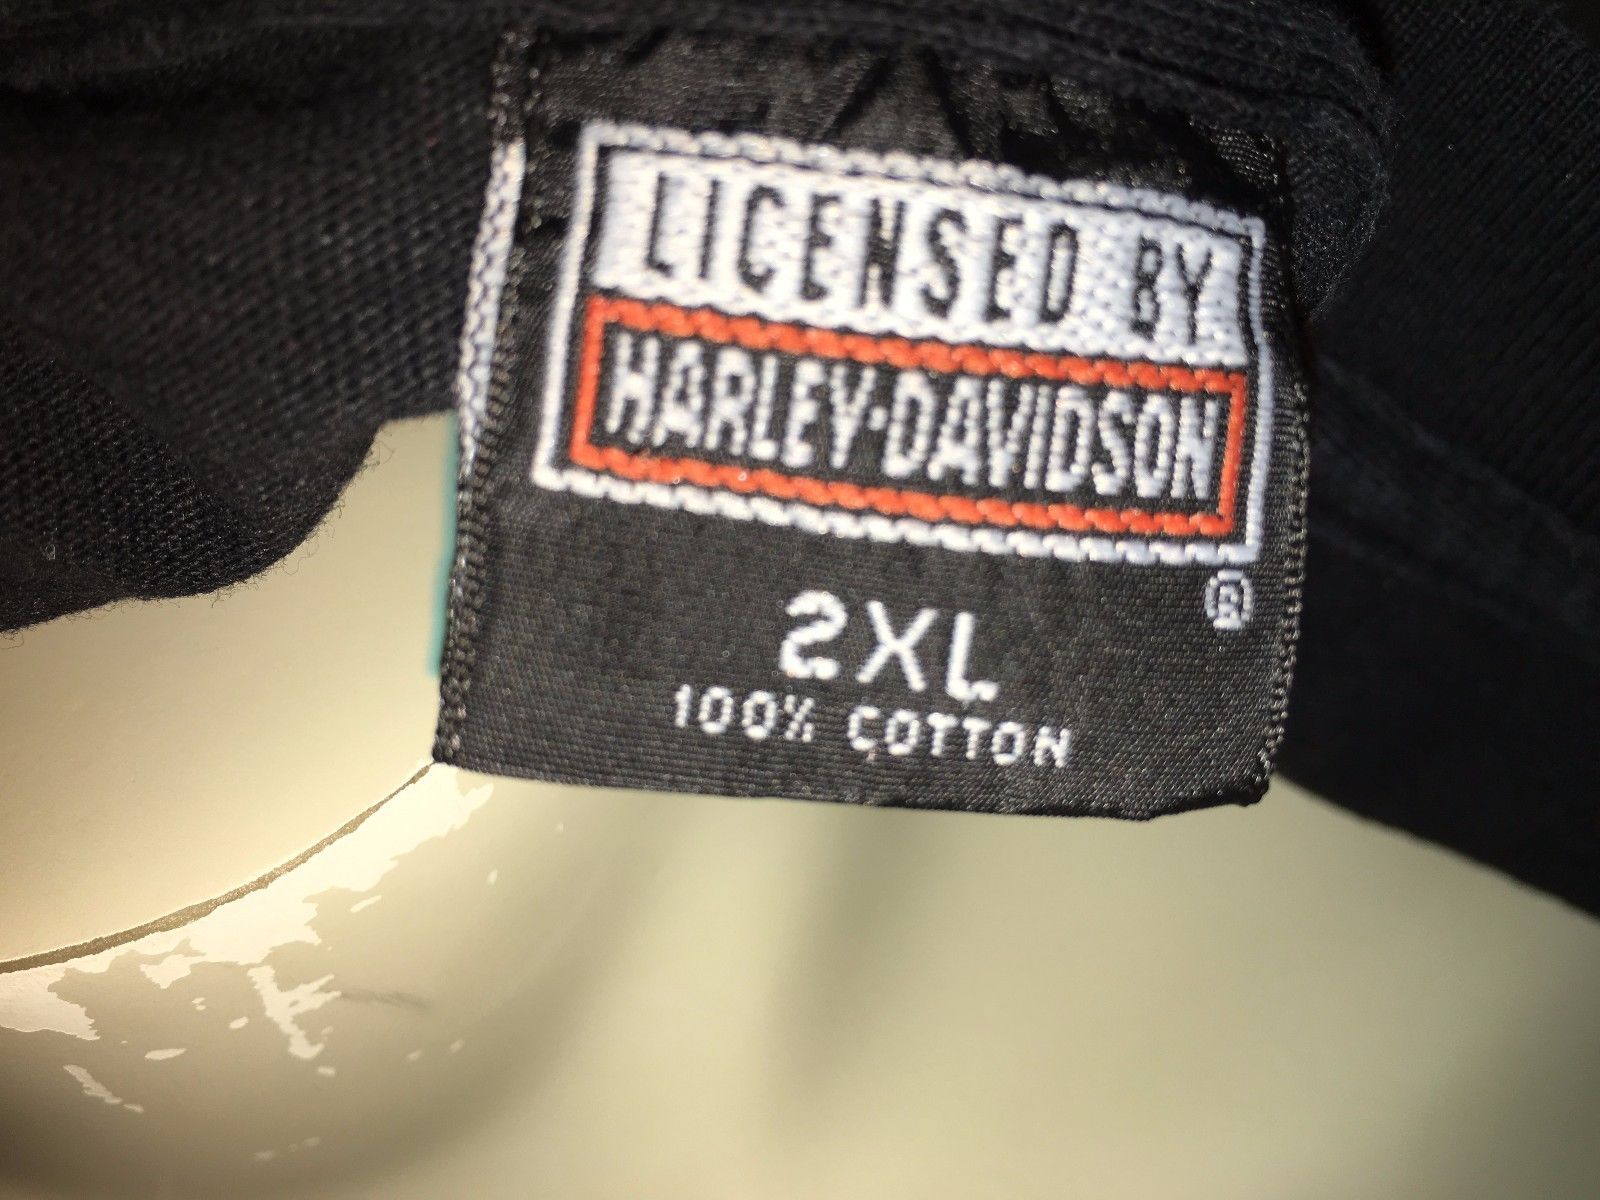 Ebay Harley Davidson Shirts Promotion Off60